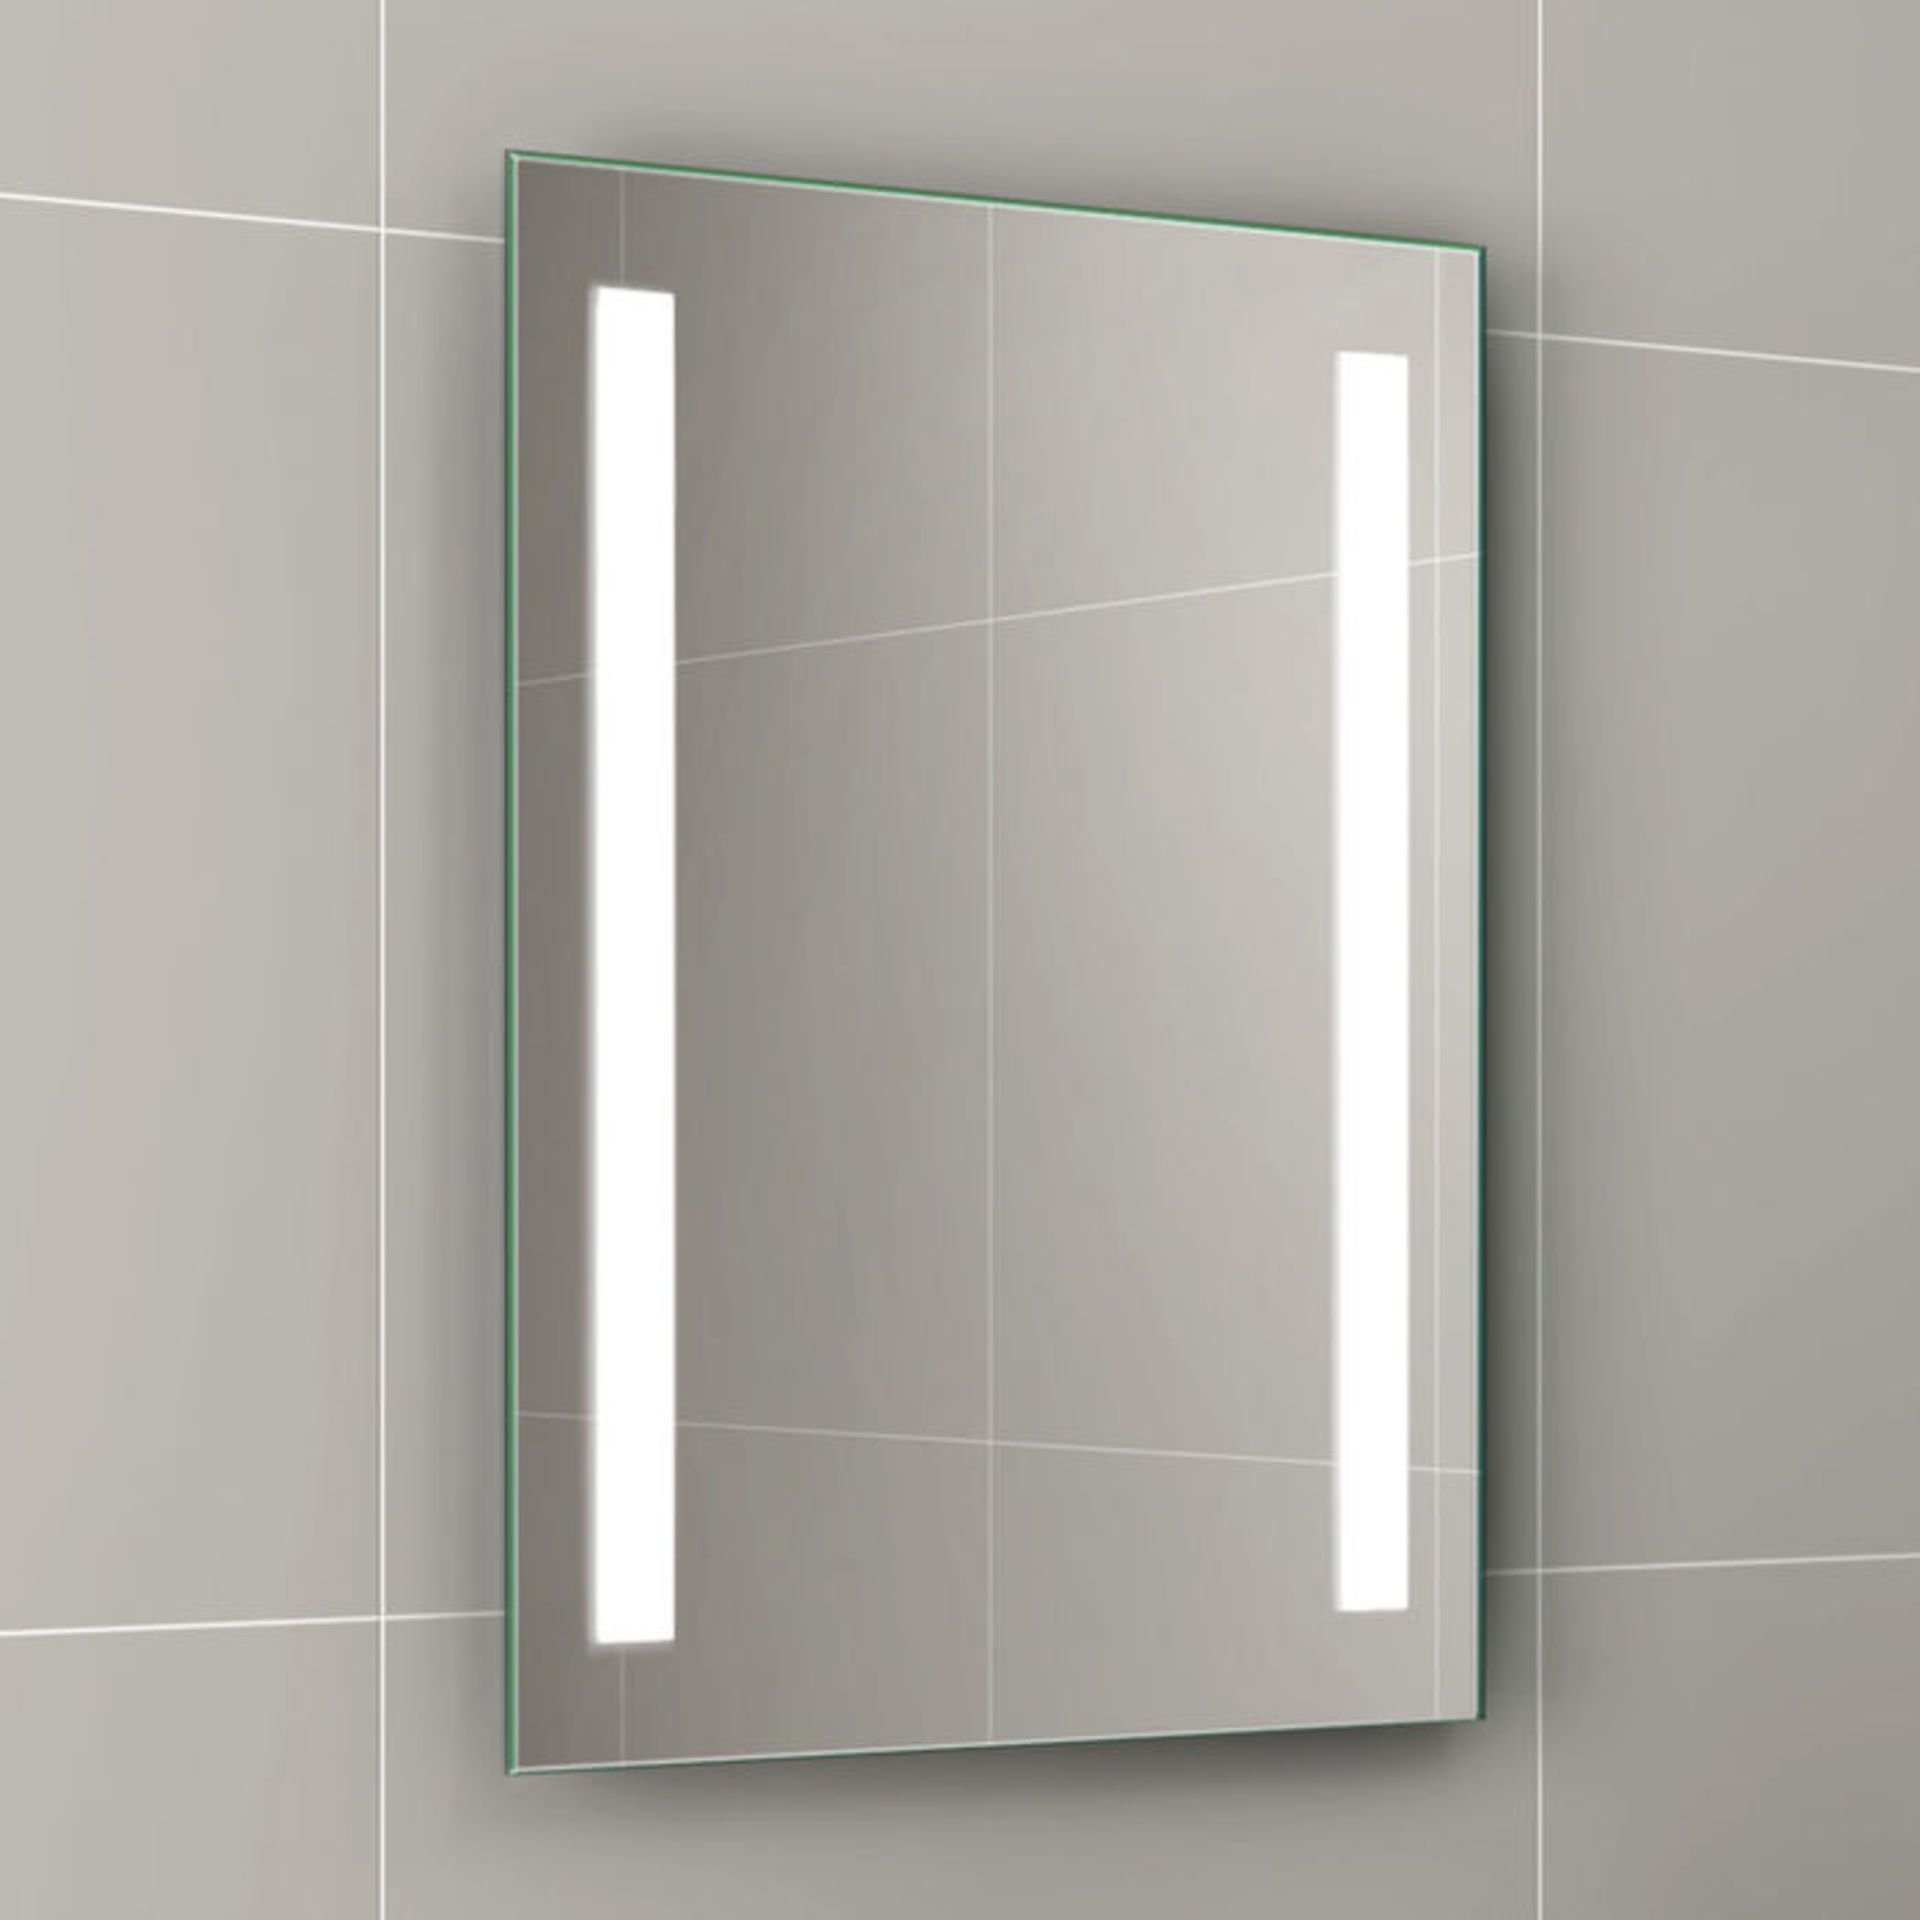 New 600x450 mm Omega Illuminated Led Mirror. Ml2108. Energy Saving Controlled On / Off Switch... - Image 2 of 3